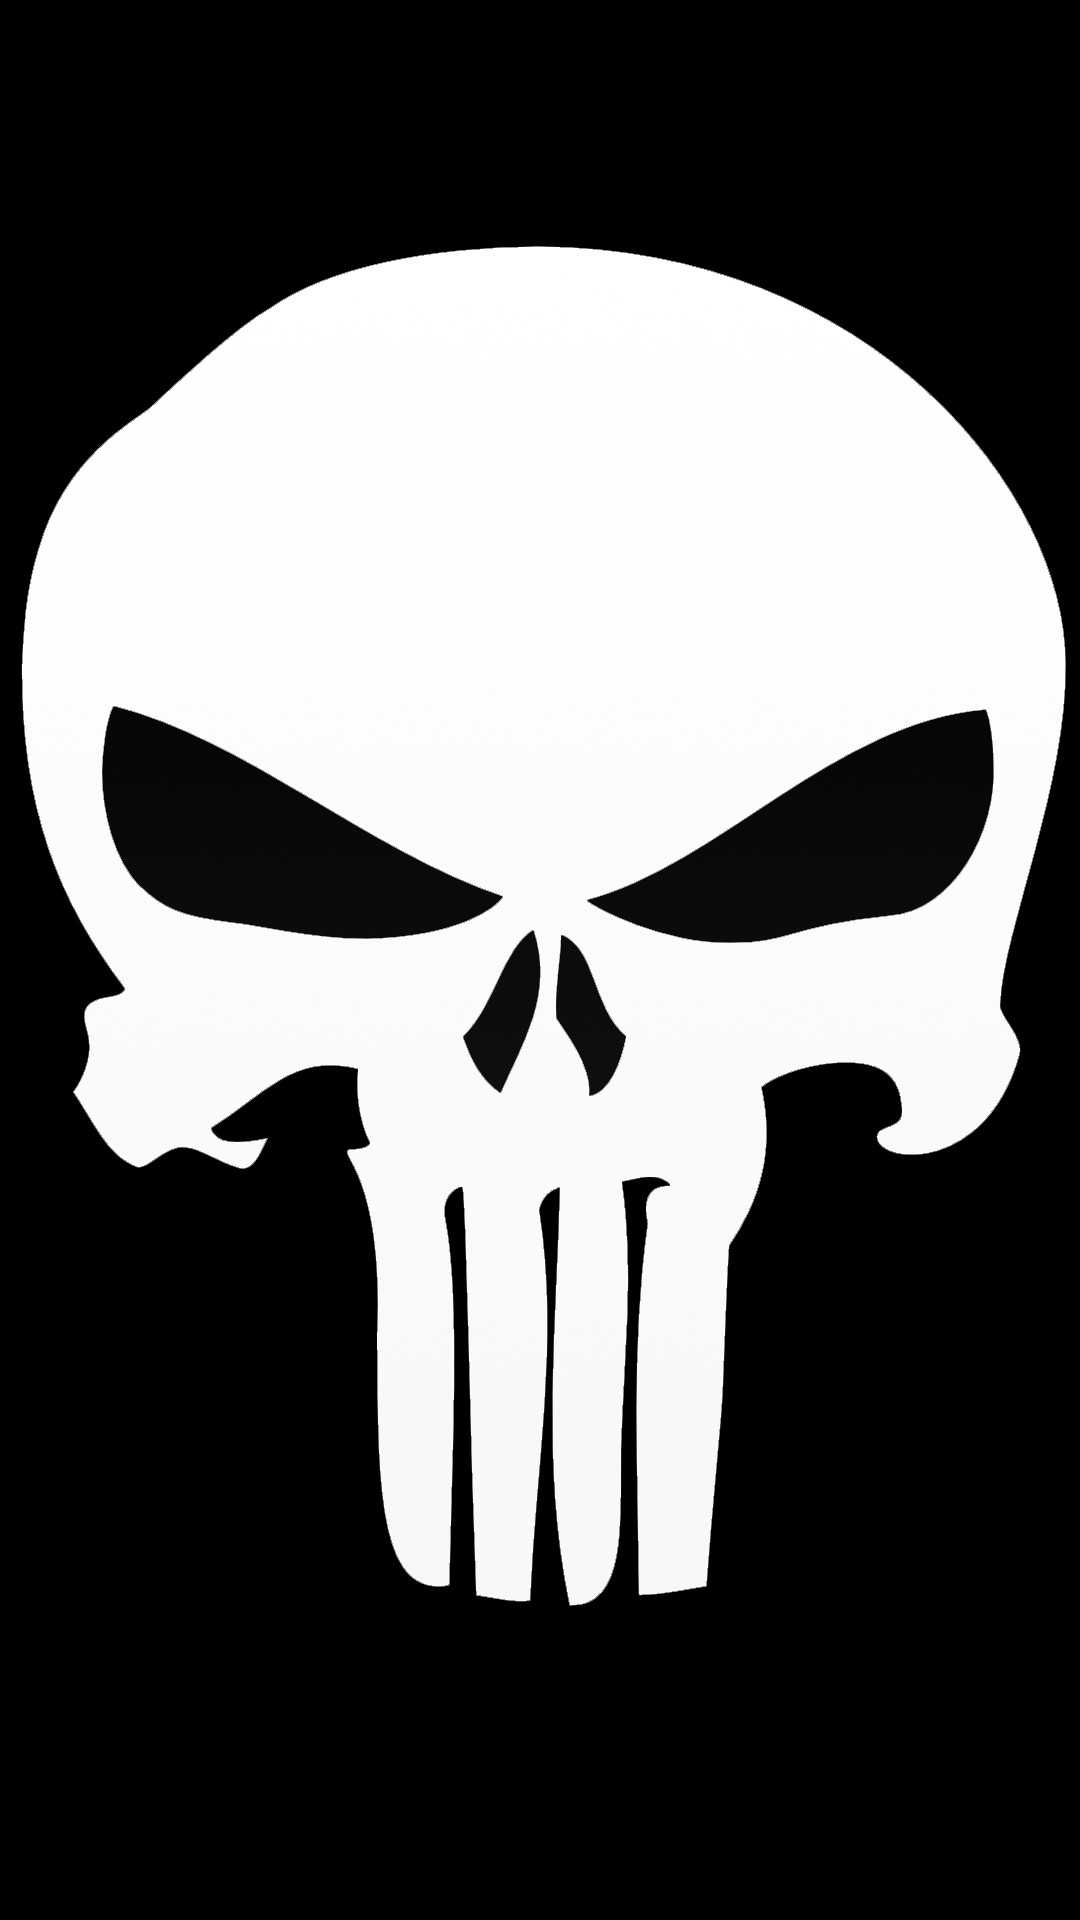 1080x1920 Marvel Punisher Logo Wallpapers Top Free Marvel Punisher Logo Backgrounds